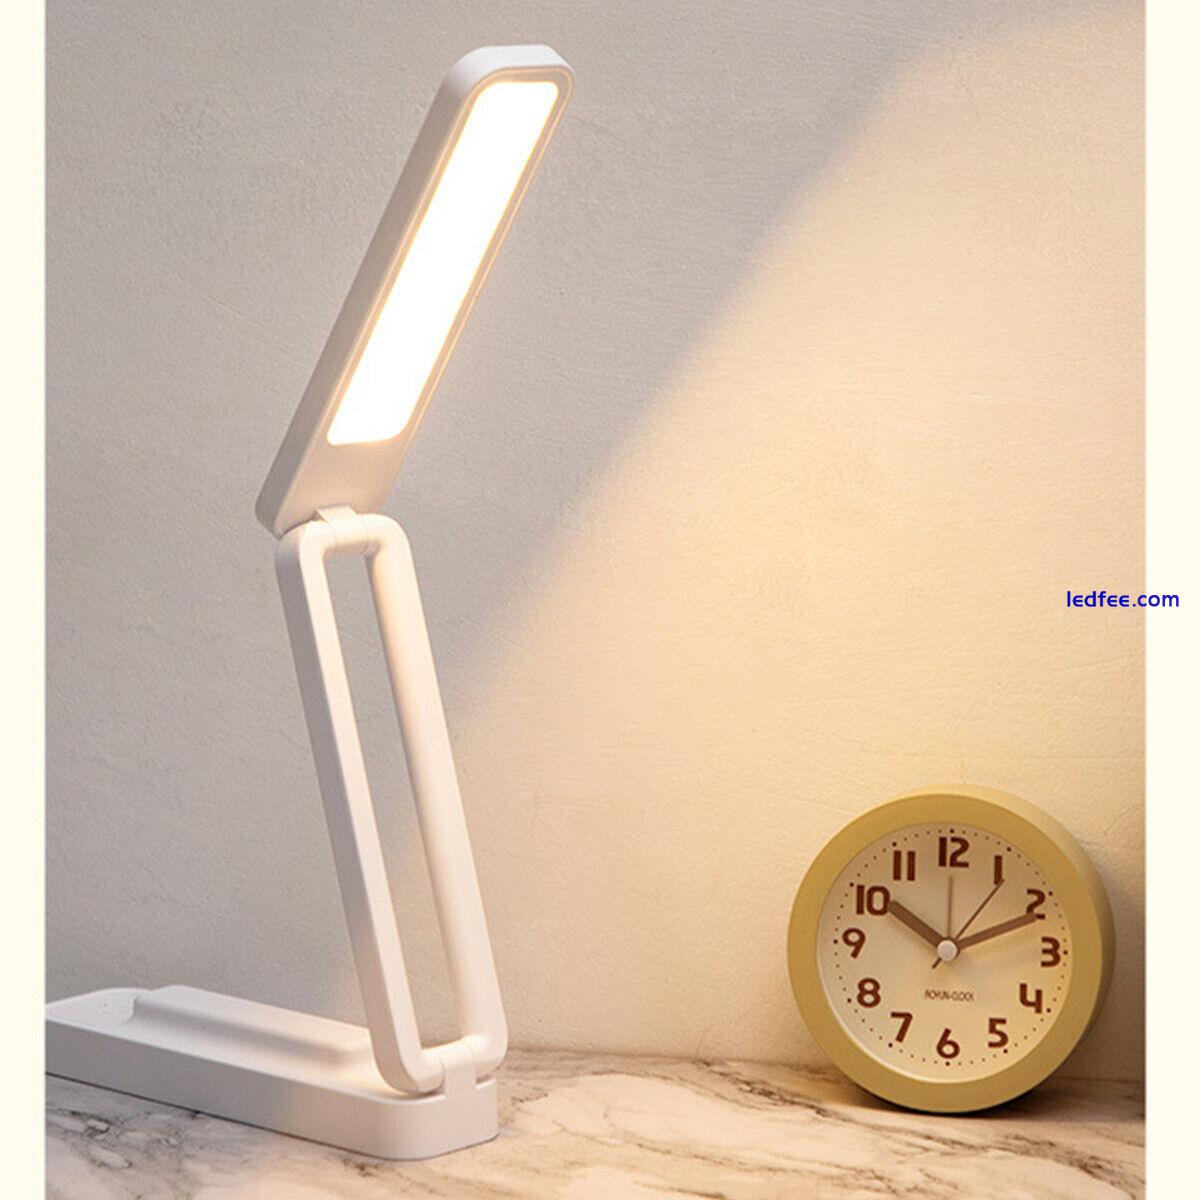 Flexible Foldable LED Desk Lamp Adjustable Folding Bed Reading Table Study Light 0 